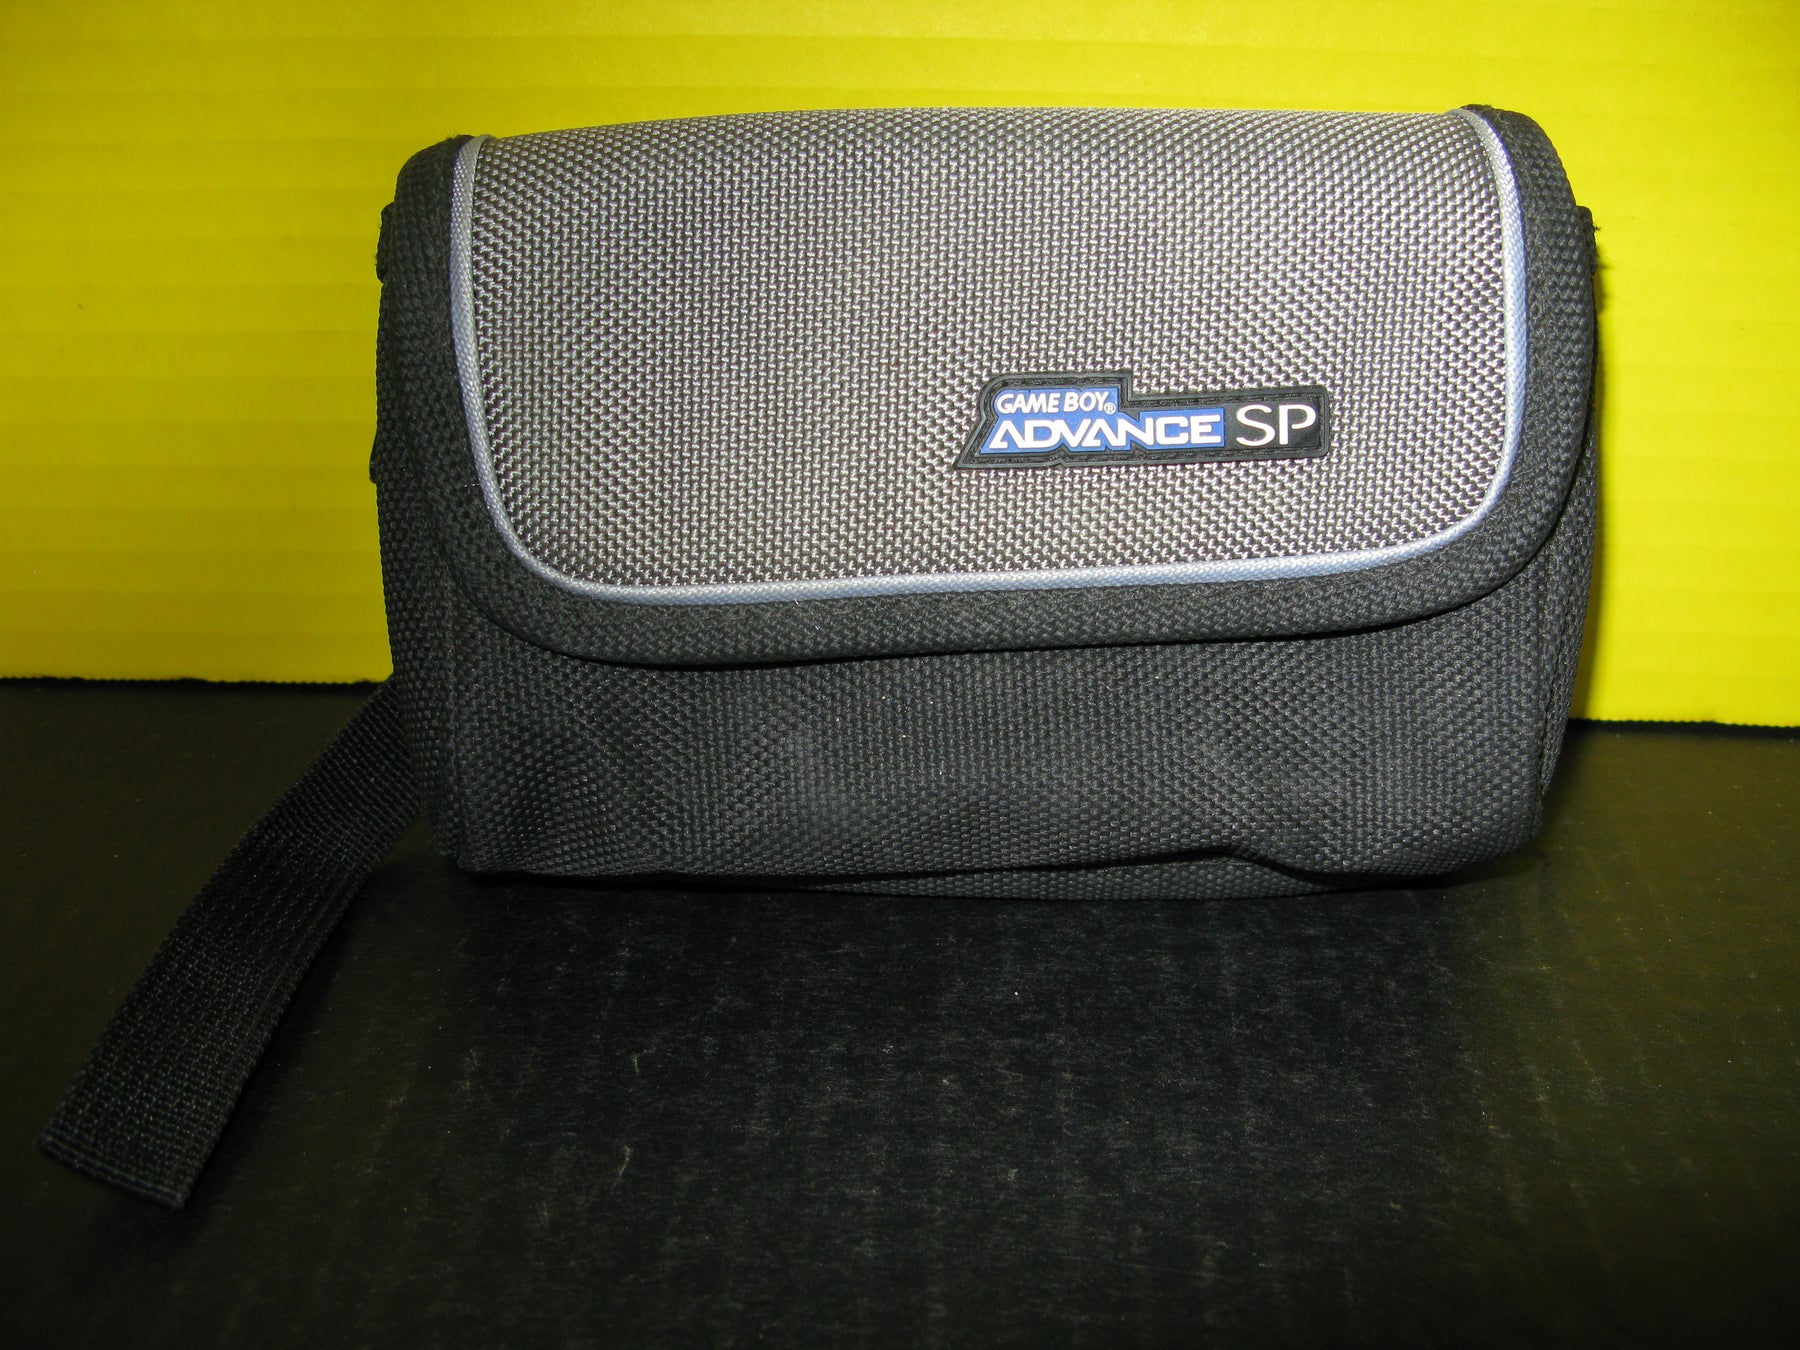 Game Boy Advance SP Case